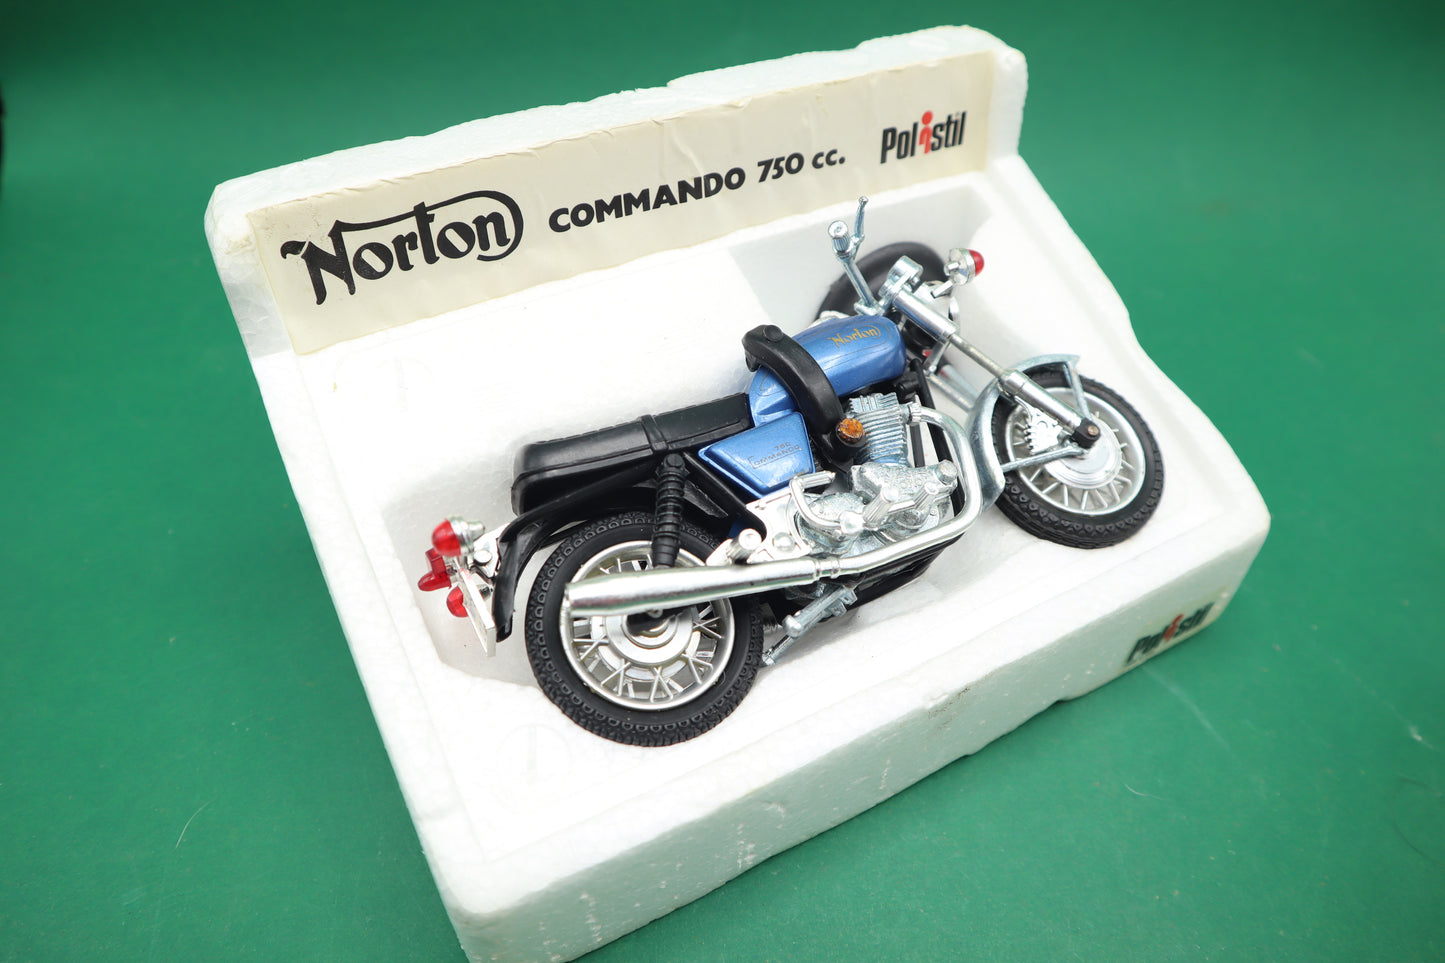 Vintage PoliStil Norton Commando 750 cc Motocycle.  Die cast 1:15 Display Box